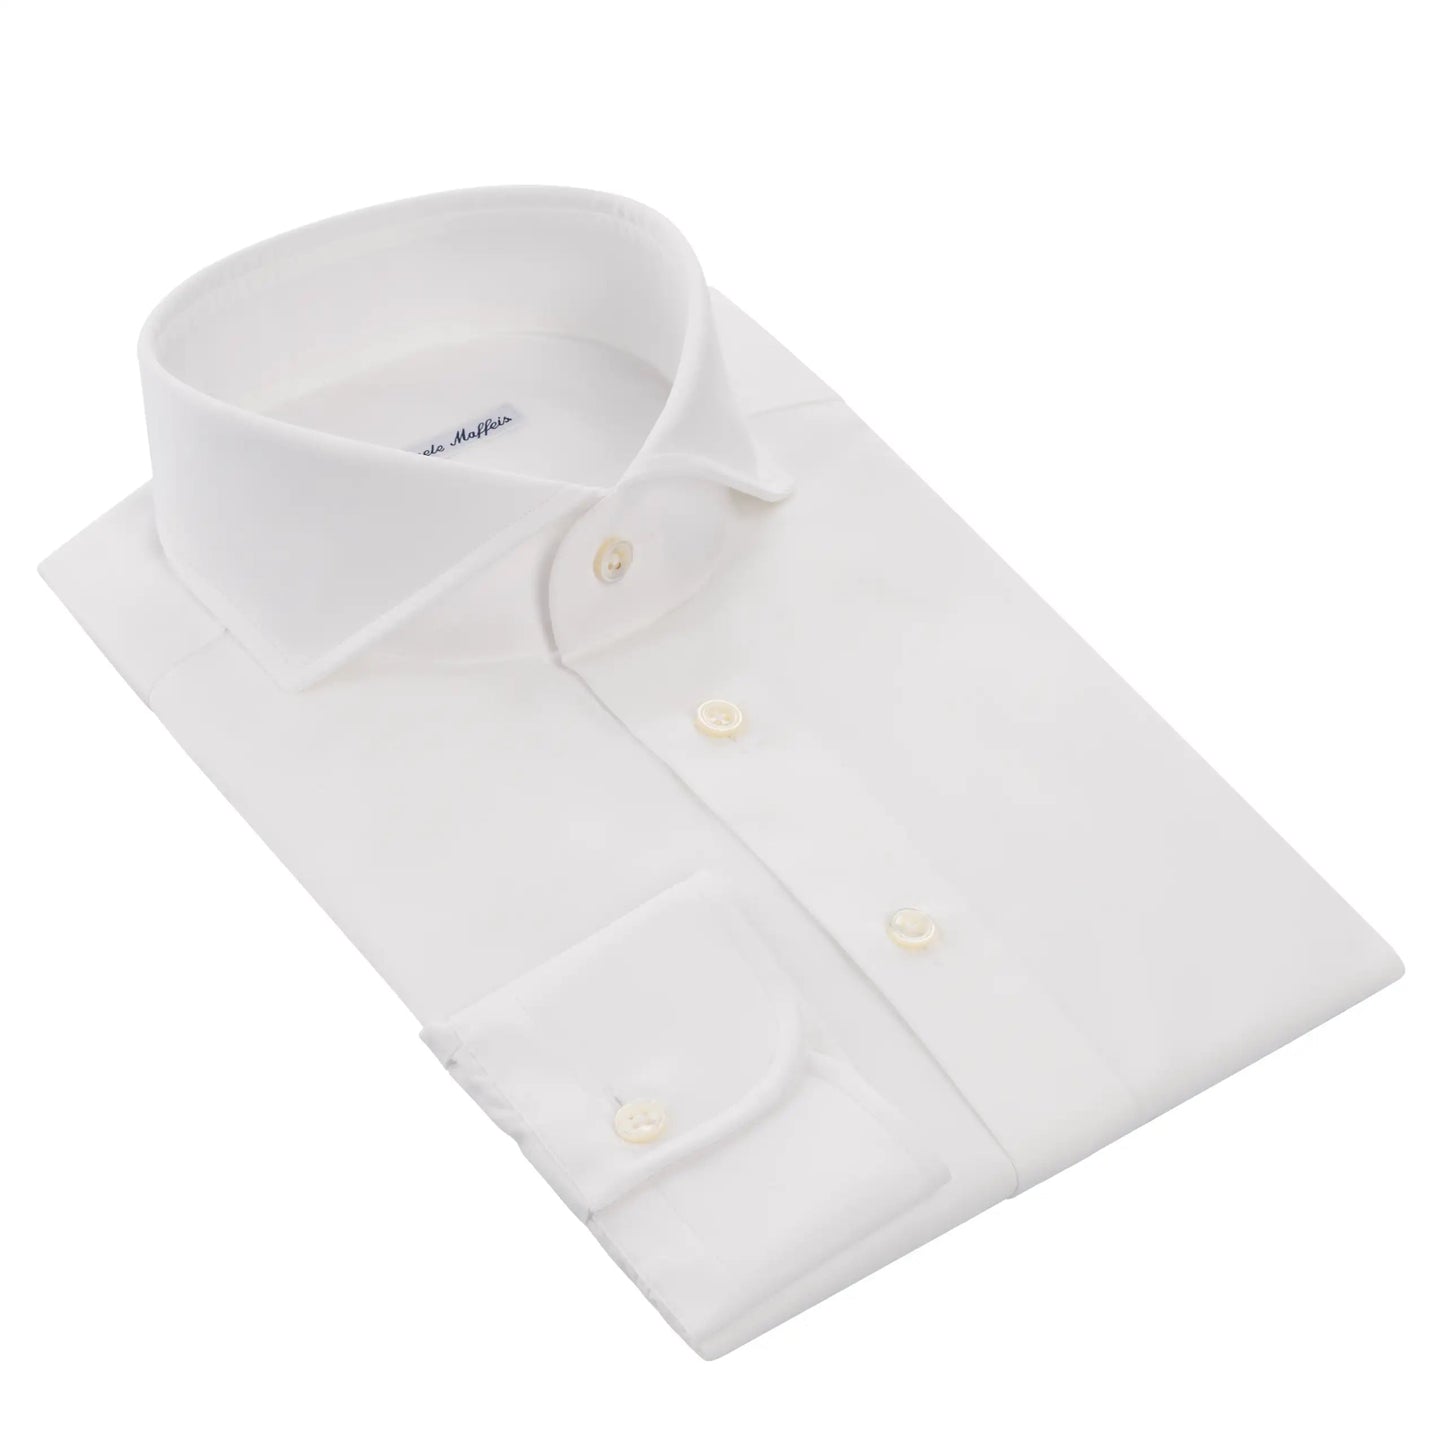 Emanuele Maffeis Plain Cotton Shirt in White - SARTALE